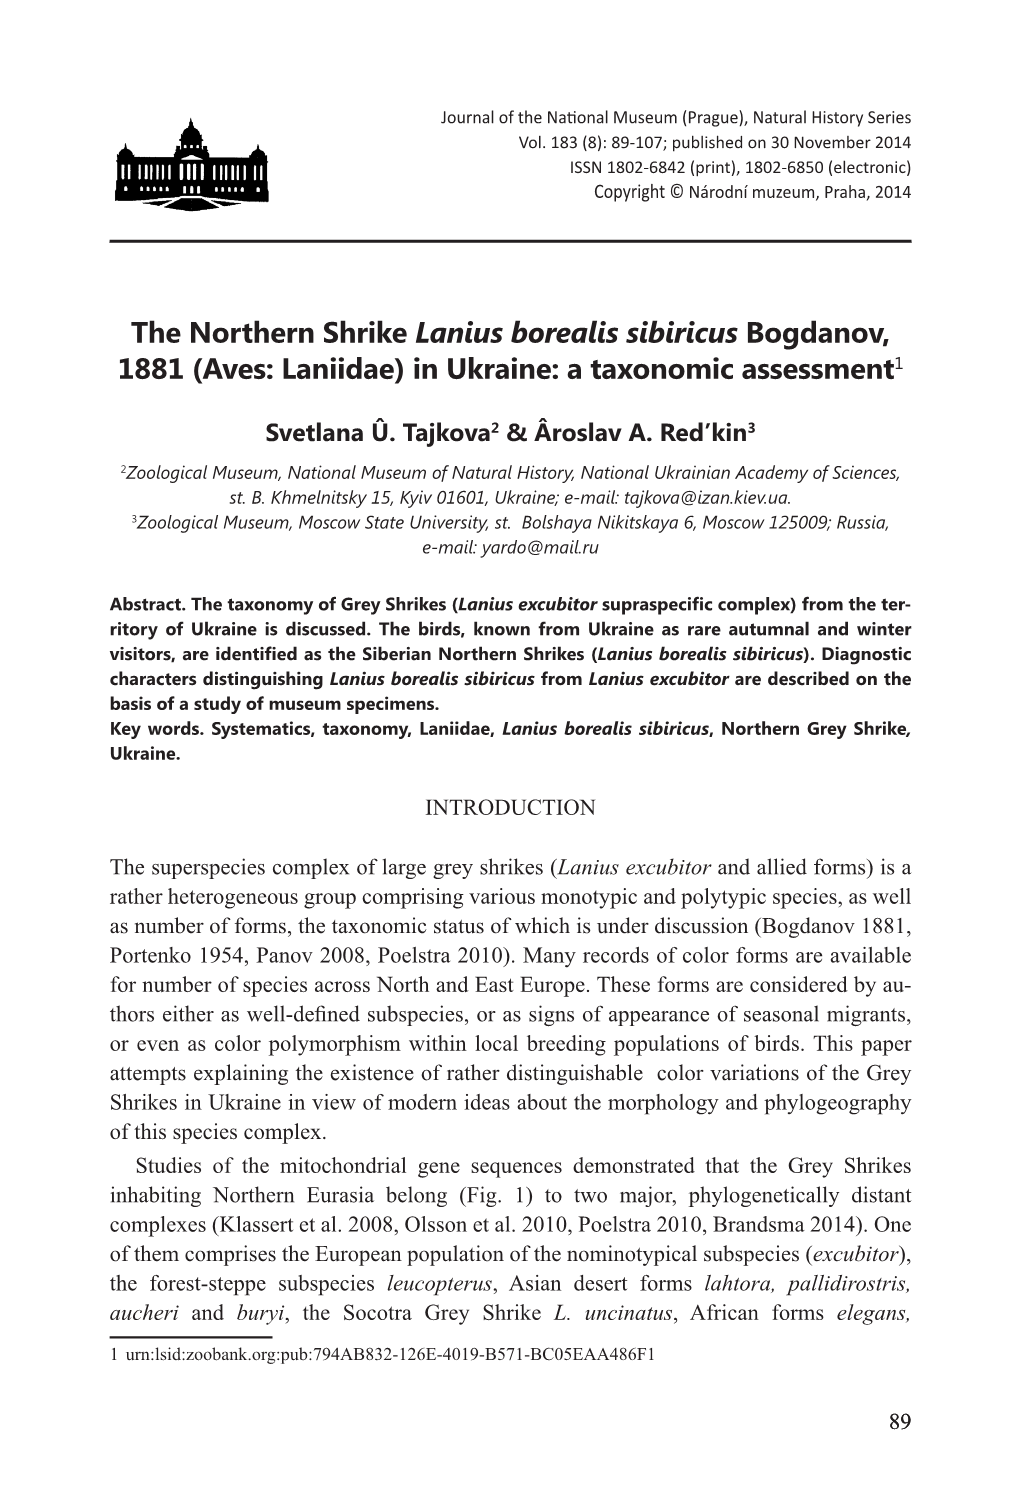 The Northern Shrike Lanius Borealis Sibiricus Bogdanov, 1881 (Aves: Laniidae) in Ukraine: a Taxonomic Assessment1